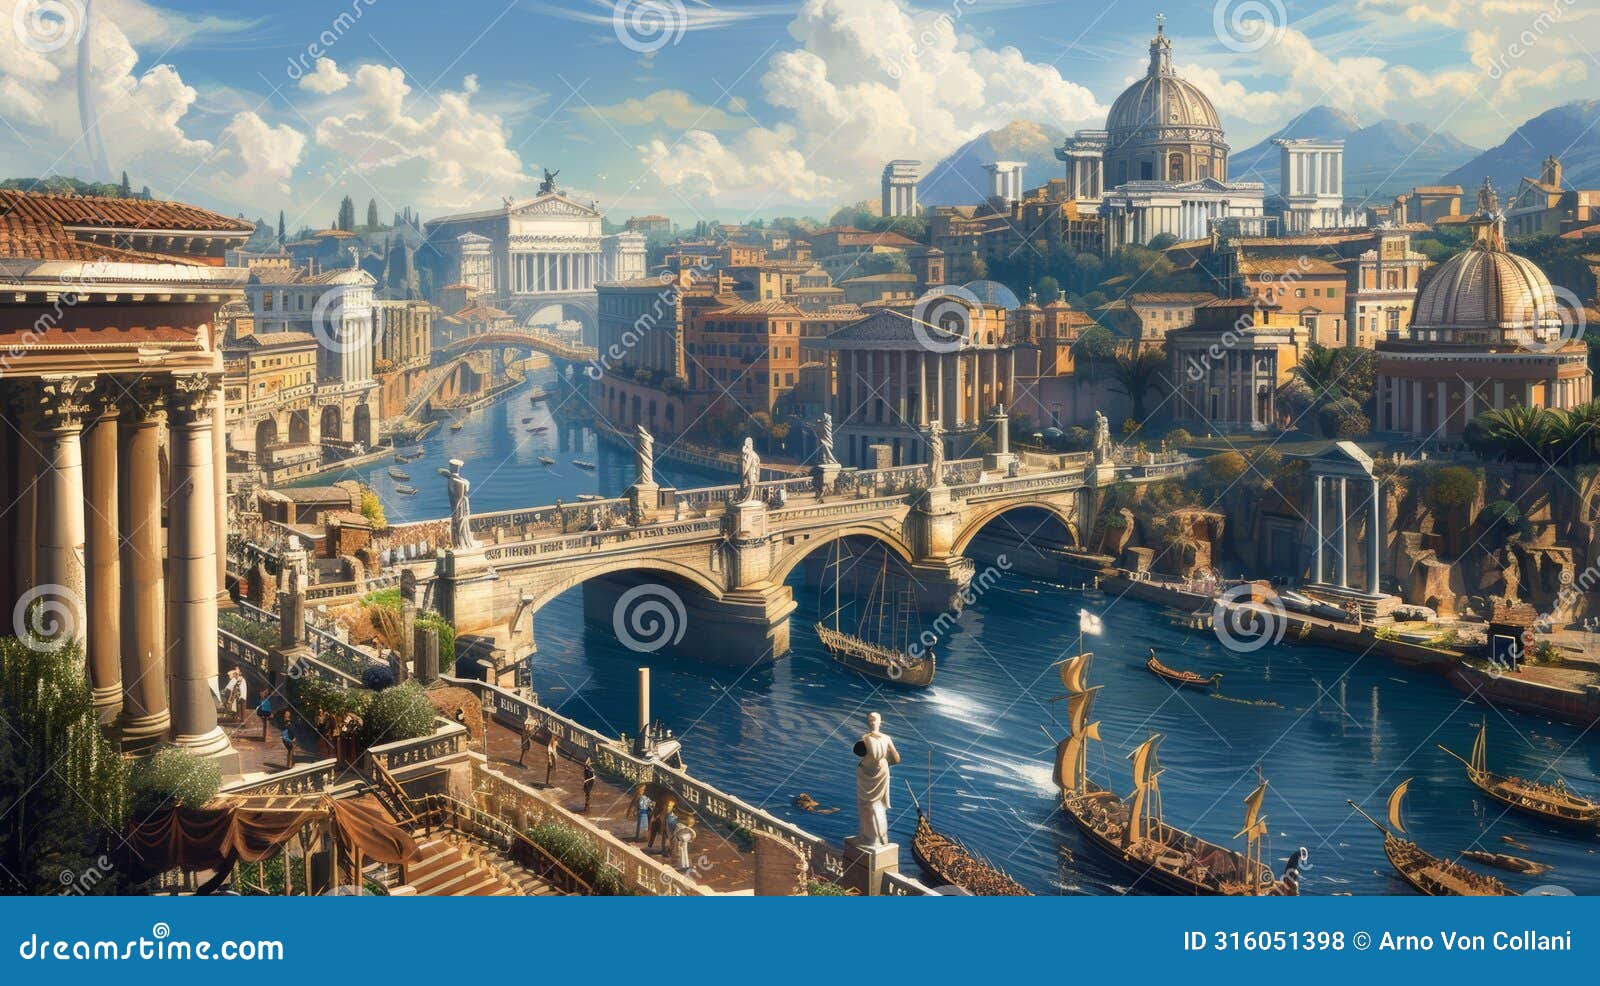 ancient roman bridge: magnificent architectural marvel spanning centuries